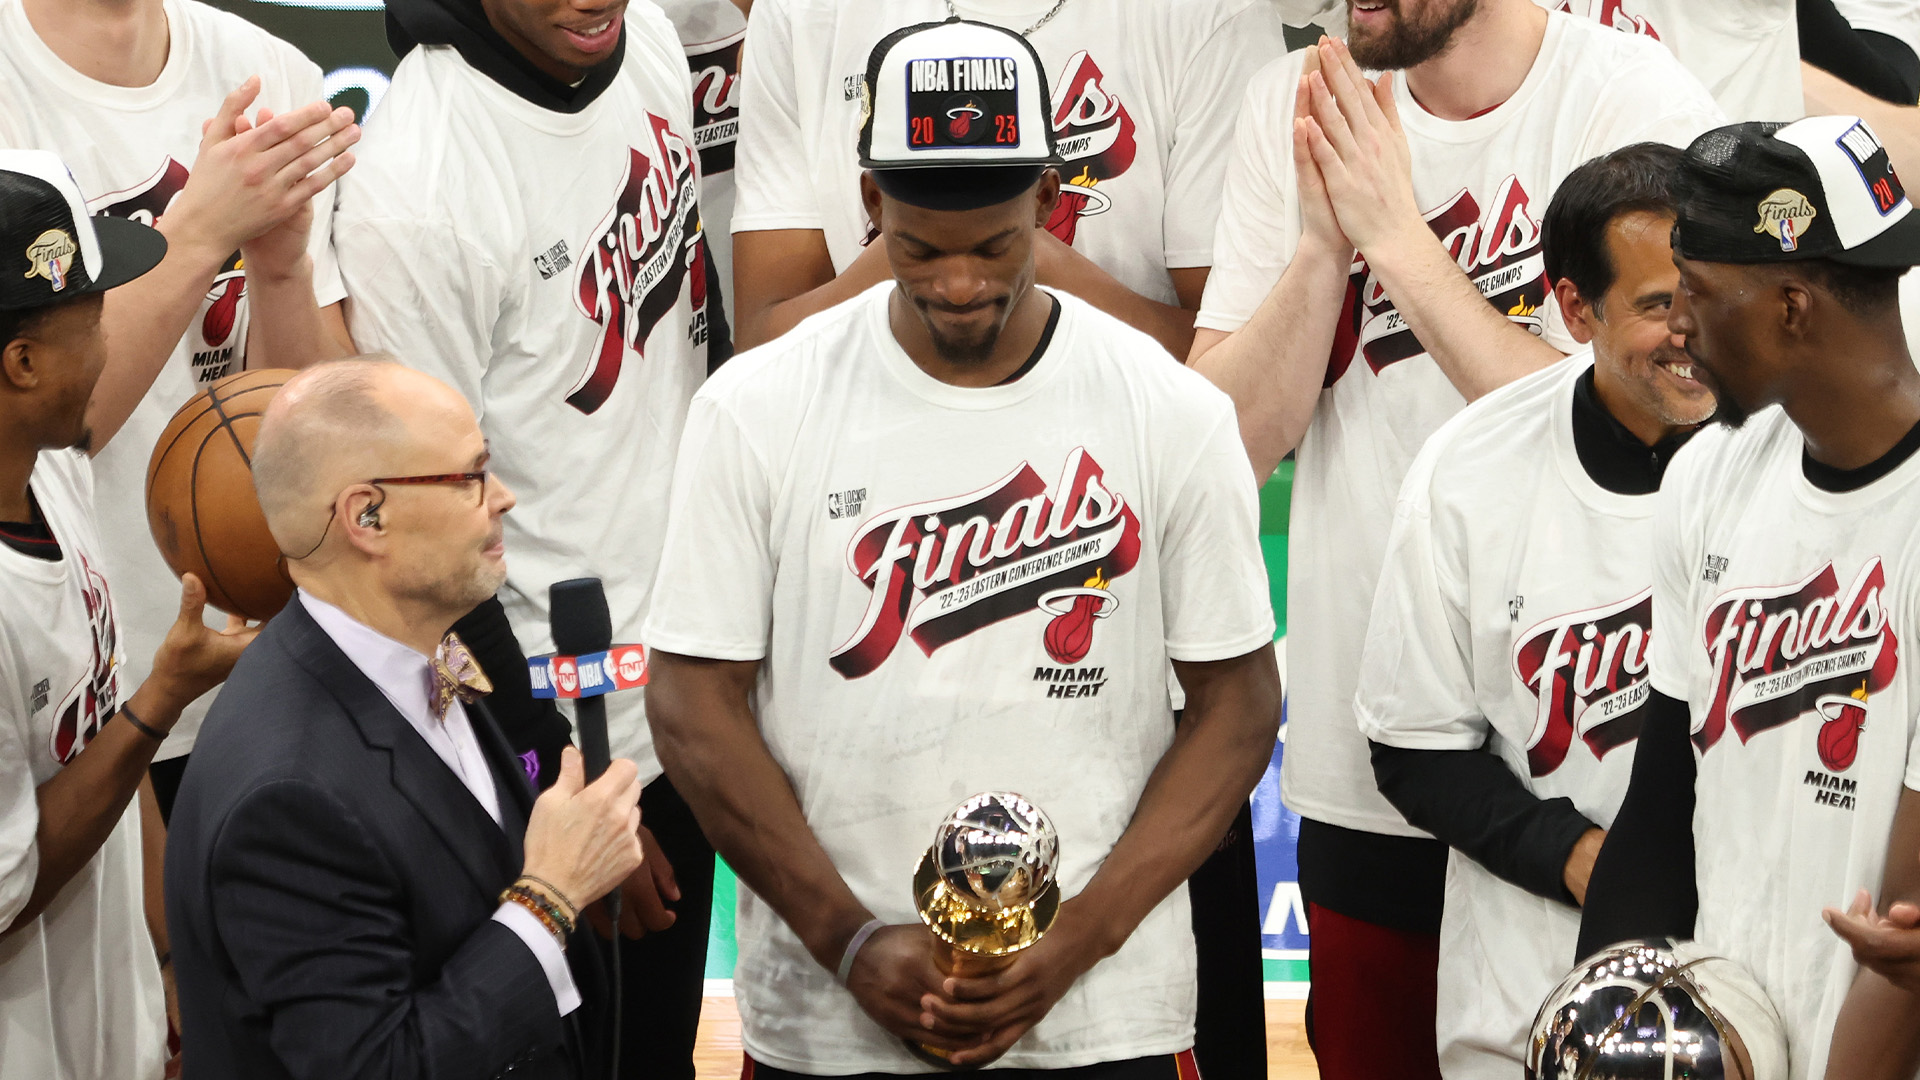 Jimmy Butler's NBA Finals mindset is written on his shirt ahead of